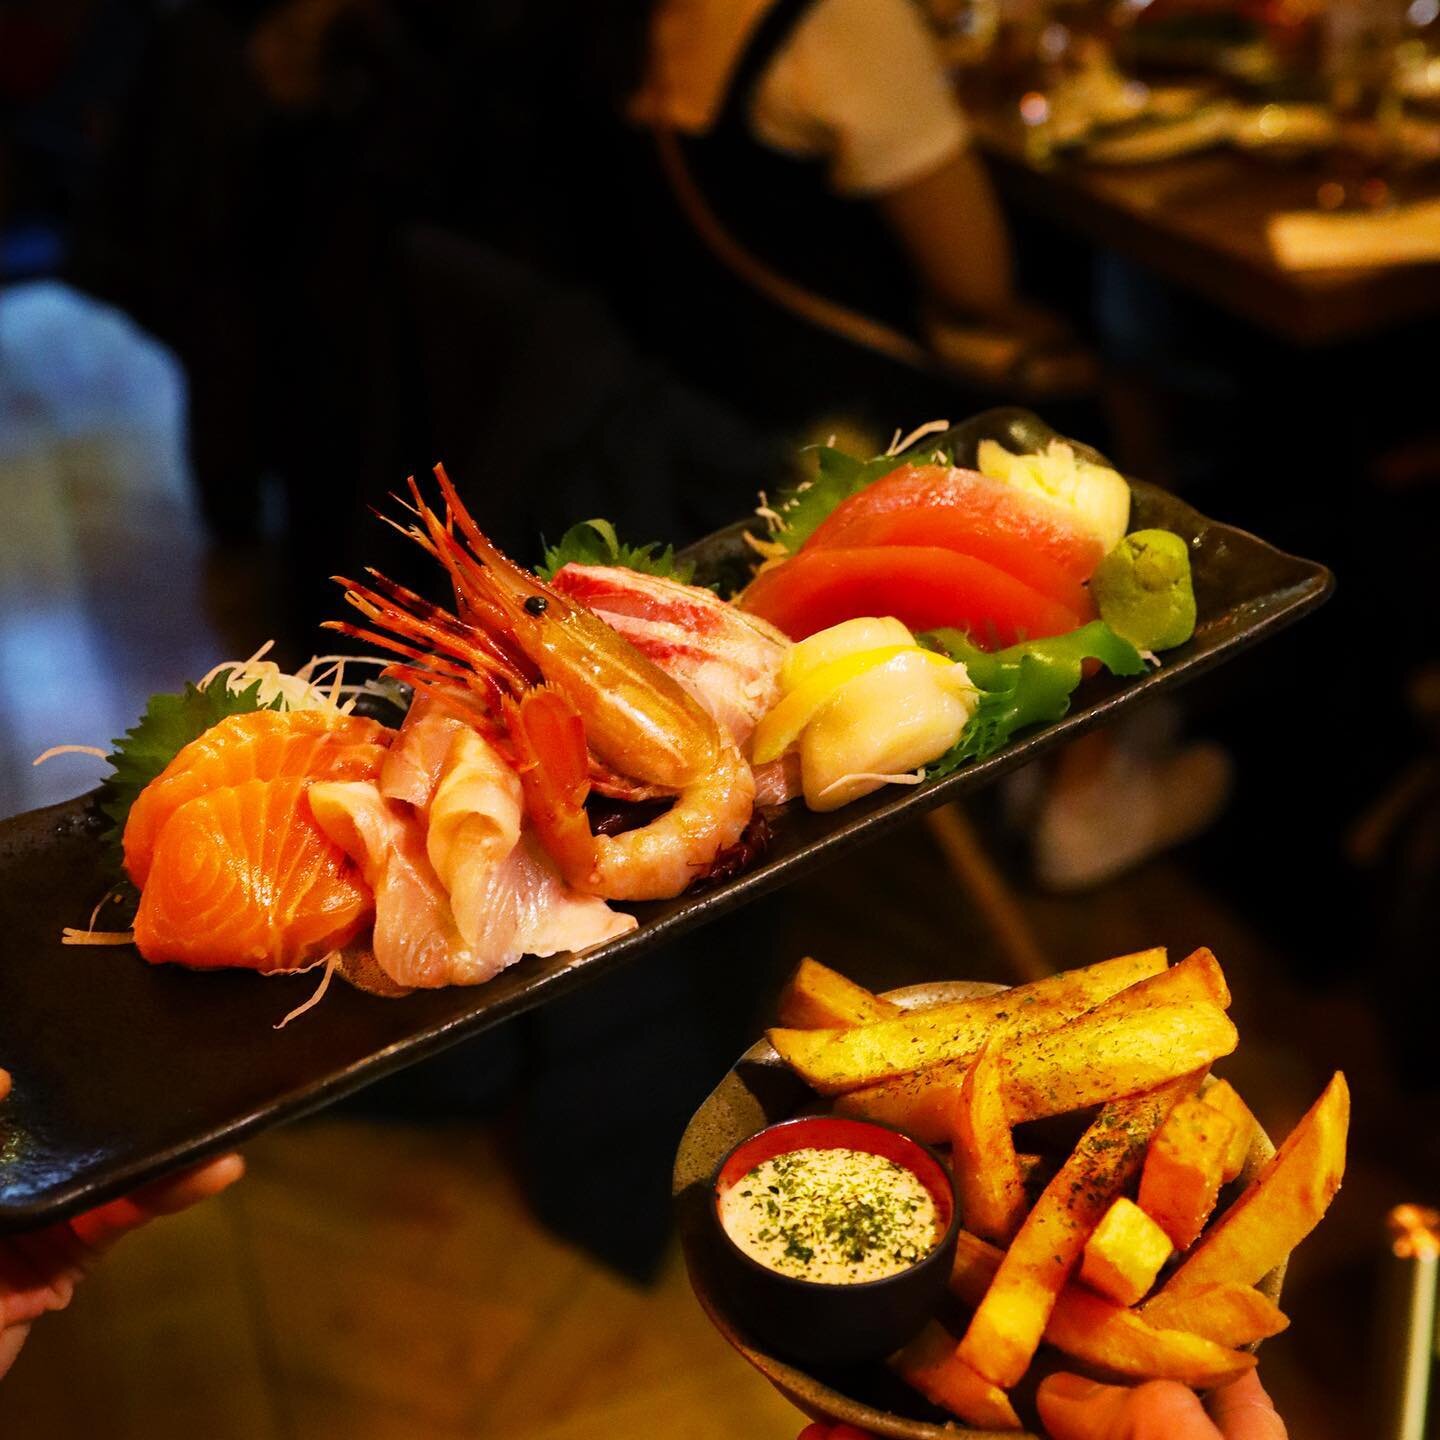 Our Sashimi in the 6ix &amp; Housemade Fries with kewpie-mentaiko dip.
.
.
.
.
.
.
#japanesefood #japaneserestaurant #sashimi #fries #japanesefries #blogto #nowtoronto #seafood #wednesday #foodie #foodietoronto